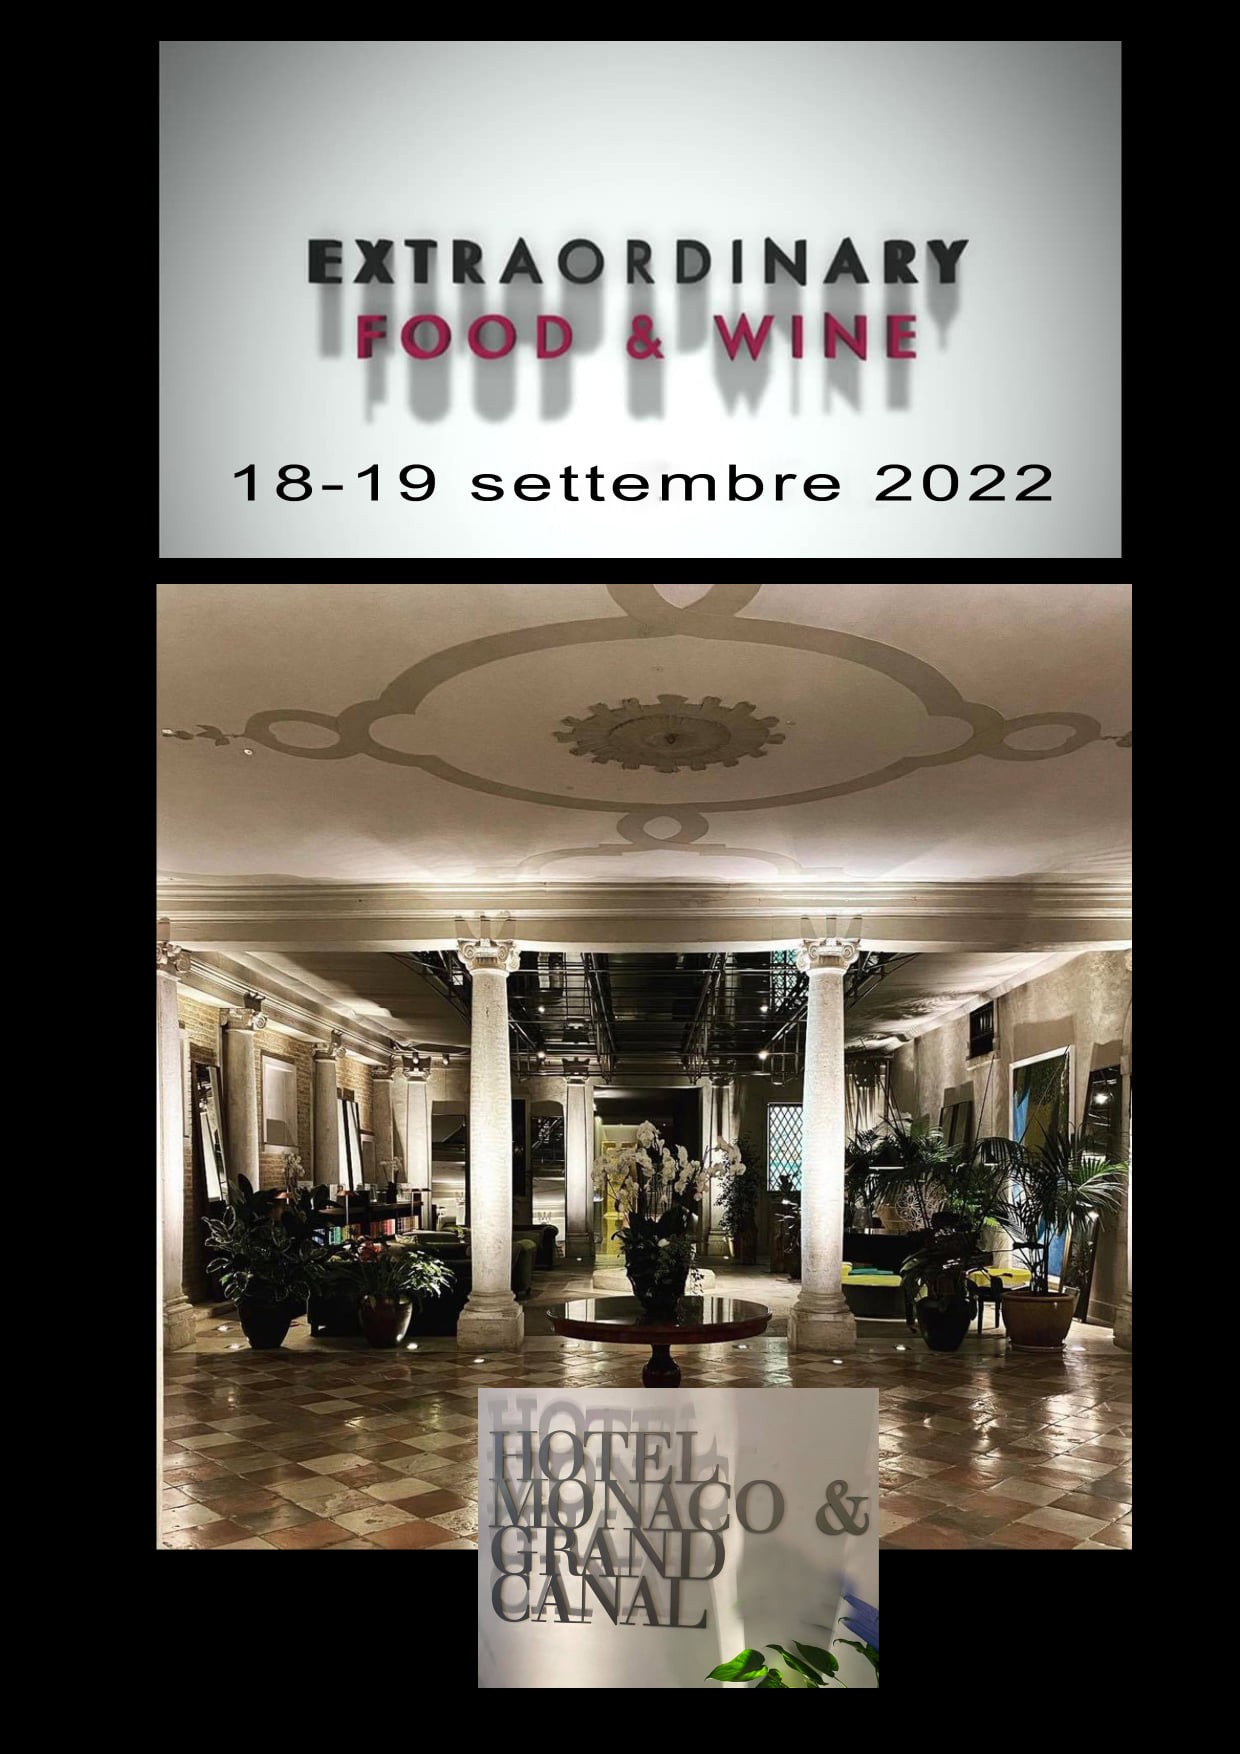 Extraordinary Food & Wine in Venice 2022